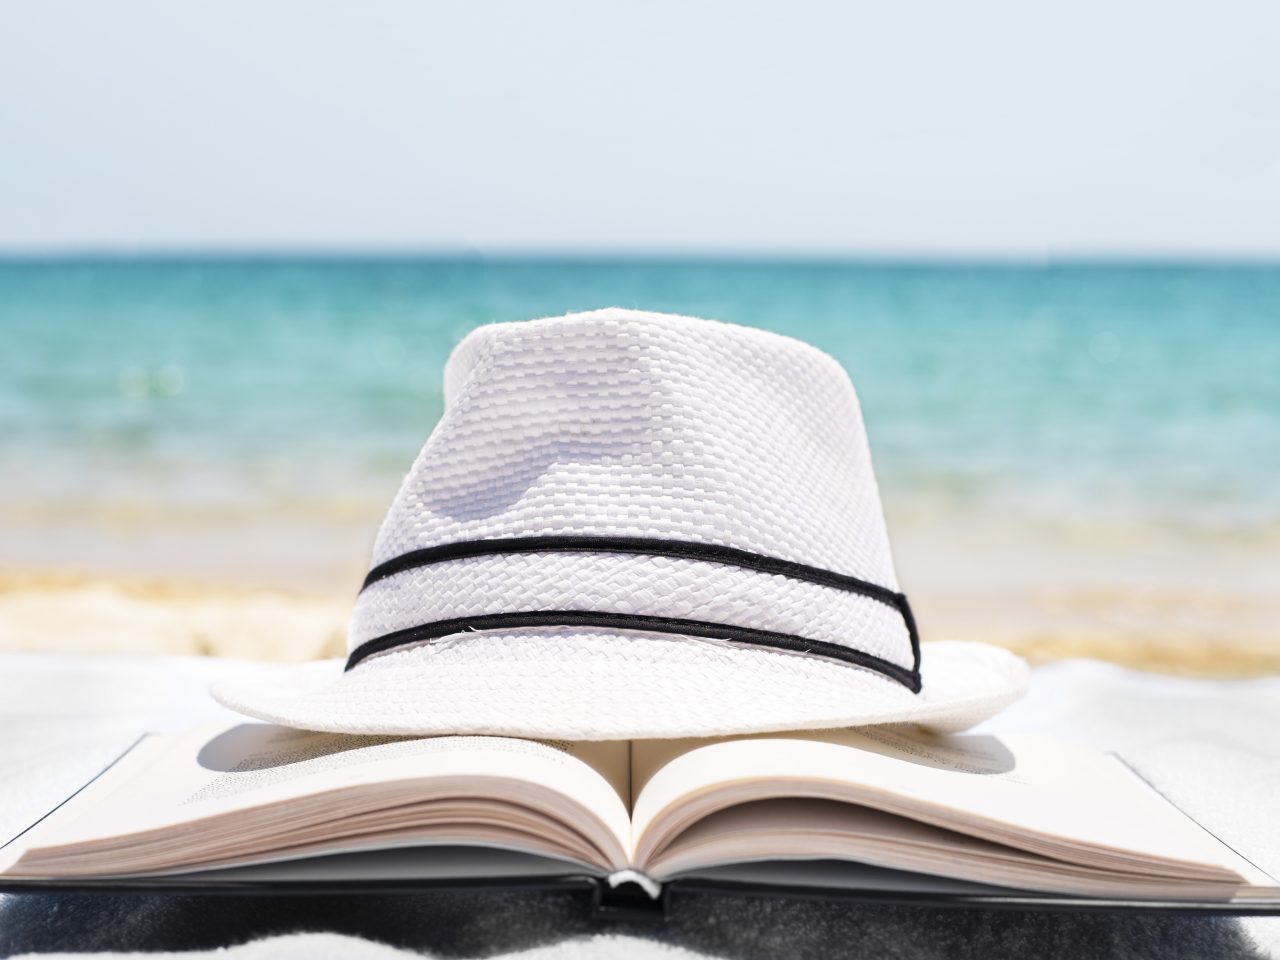 https://www.opti-hc.de/wp-content/uploads/2022/02/shallow-focus-shot-of-a-white-hat-on-an-open-book-in-the-beach-1280x960.jpg